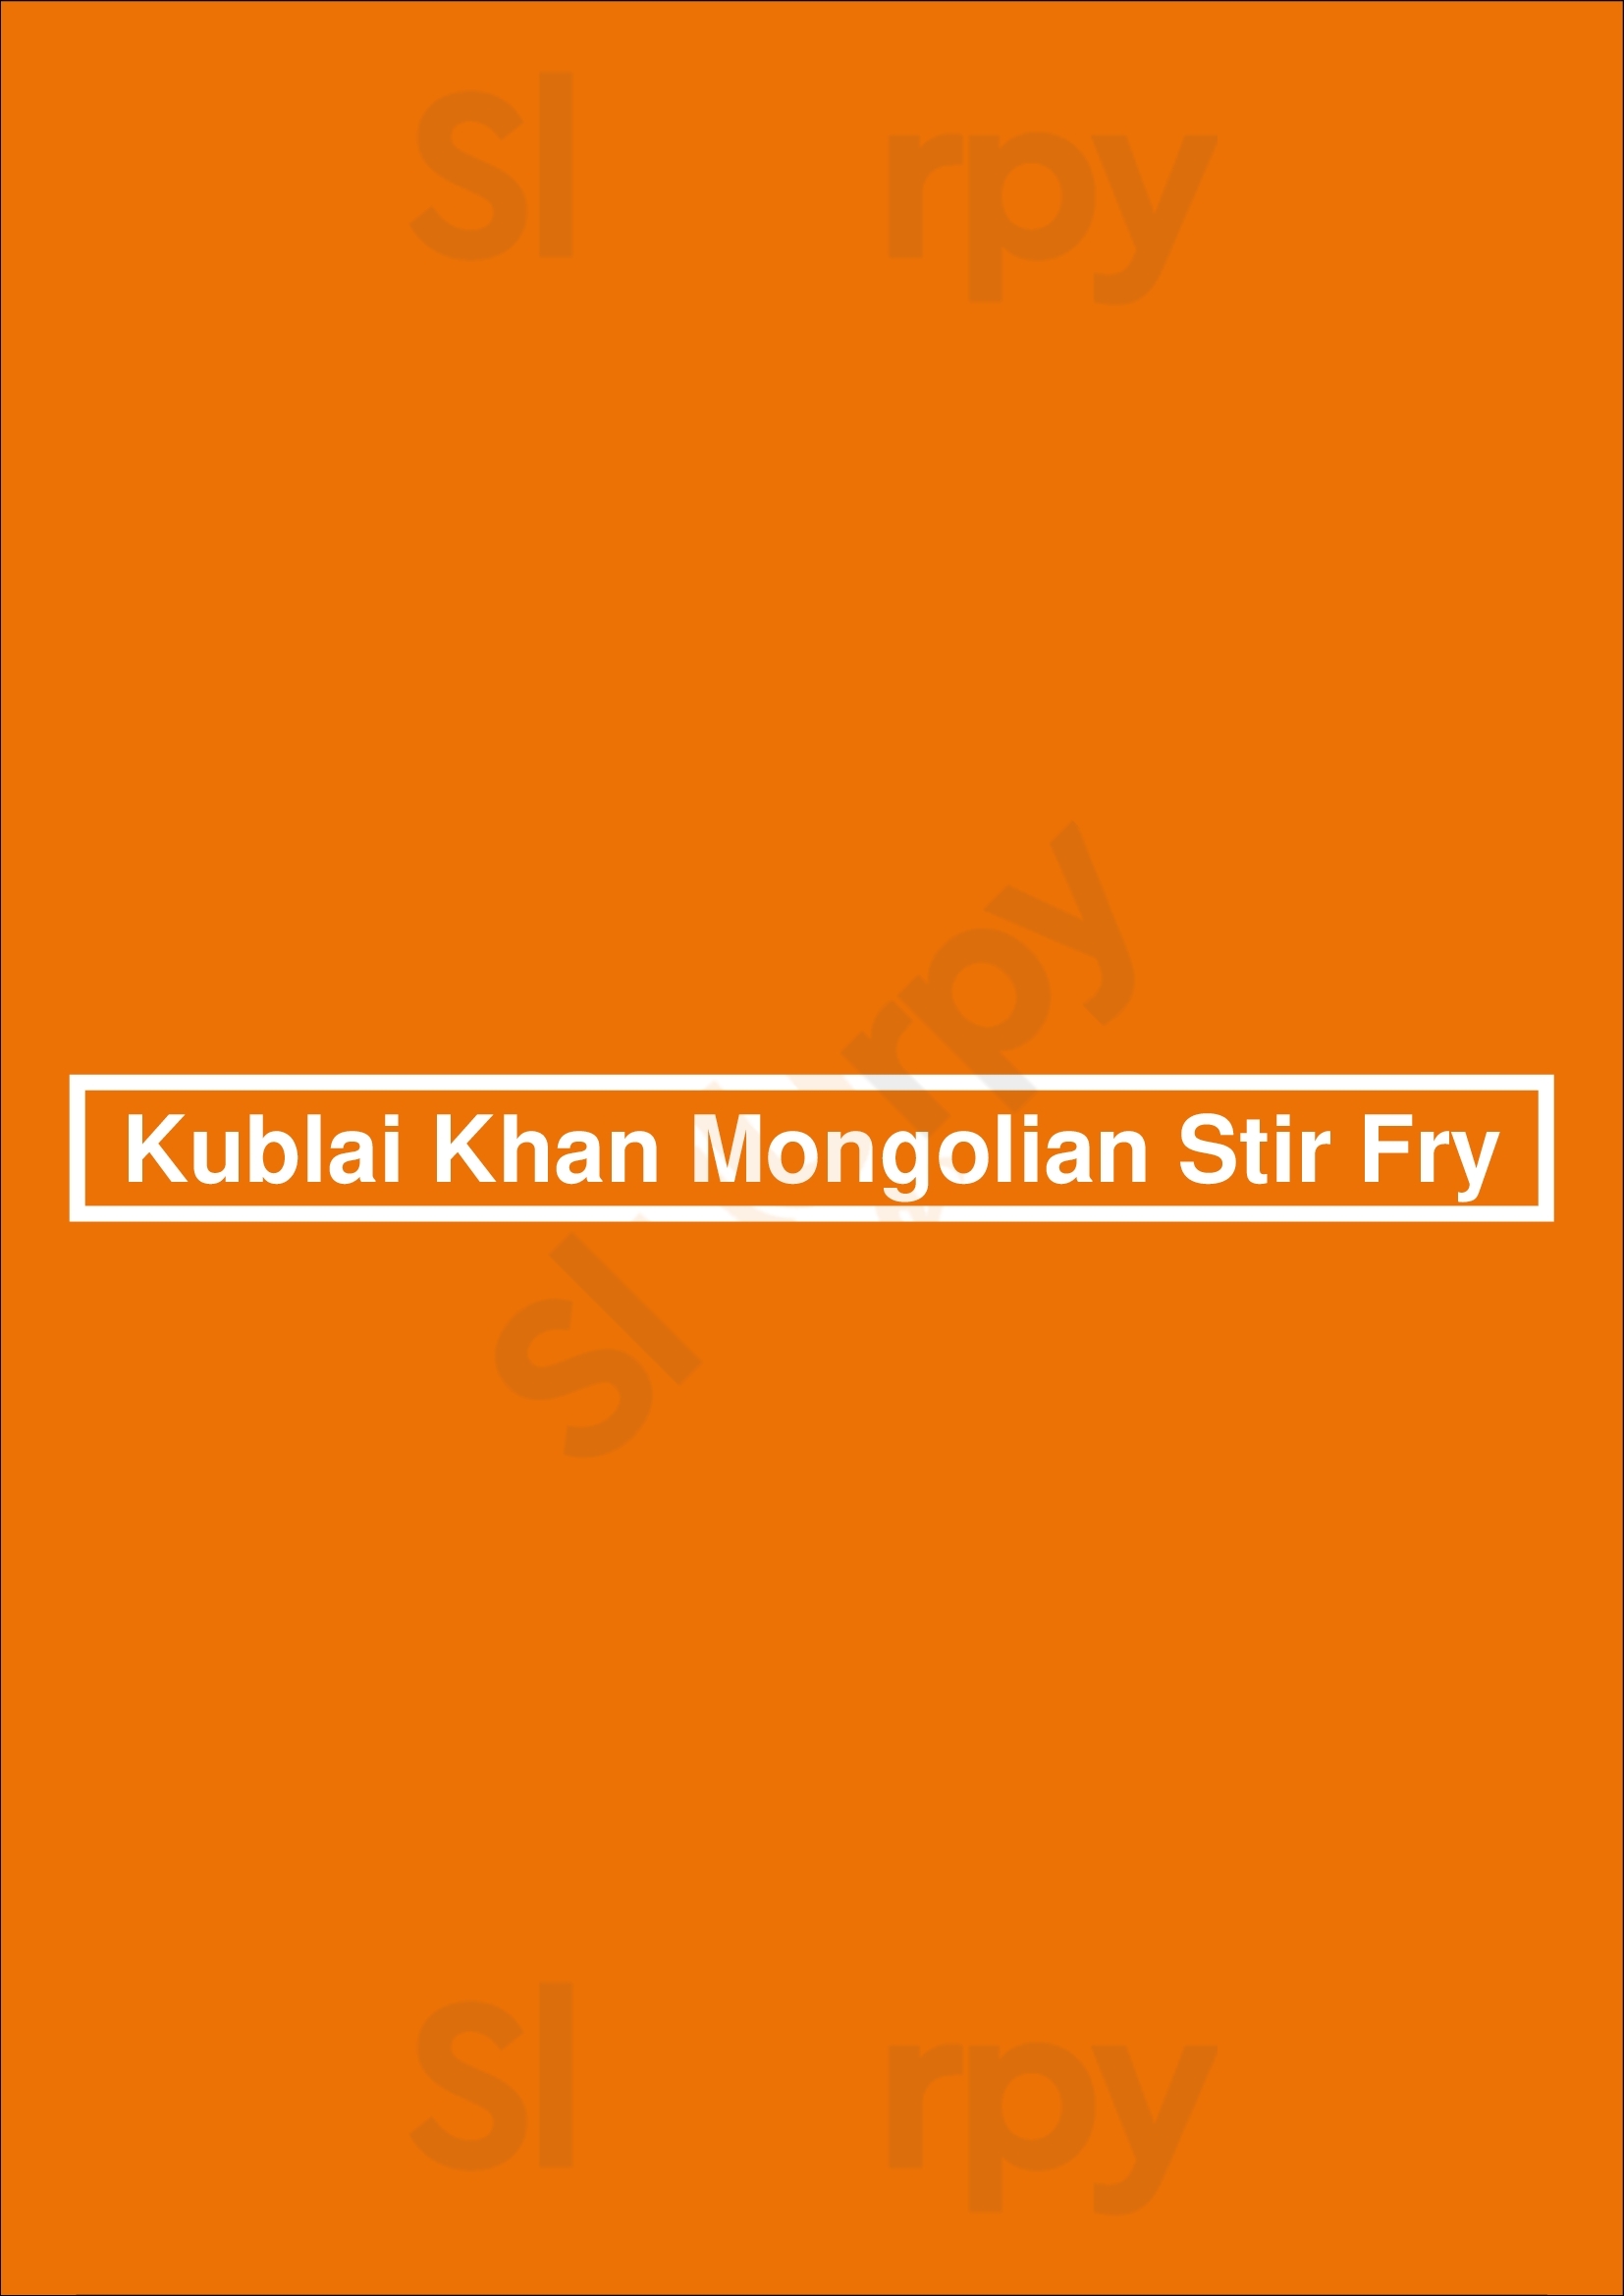 Kublai Khan Mongolian Stir Fry Houston Menu - 1